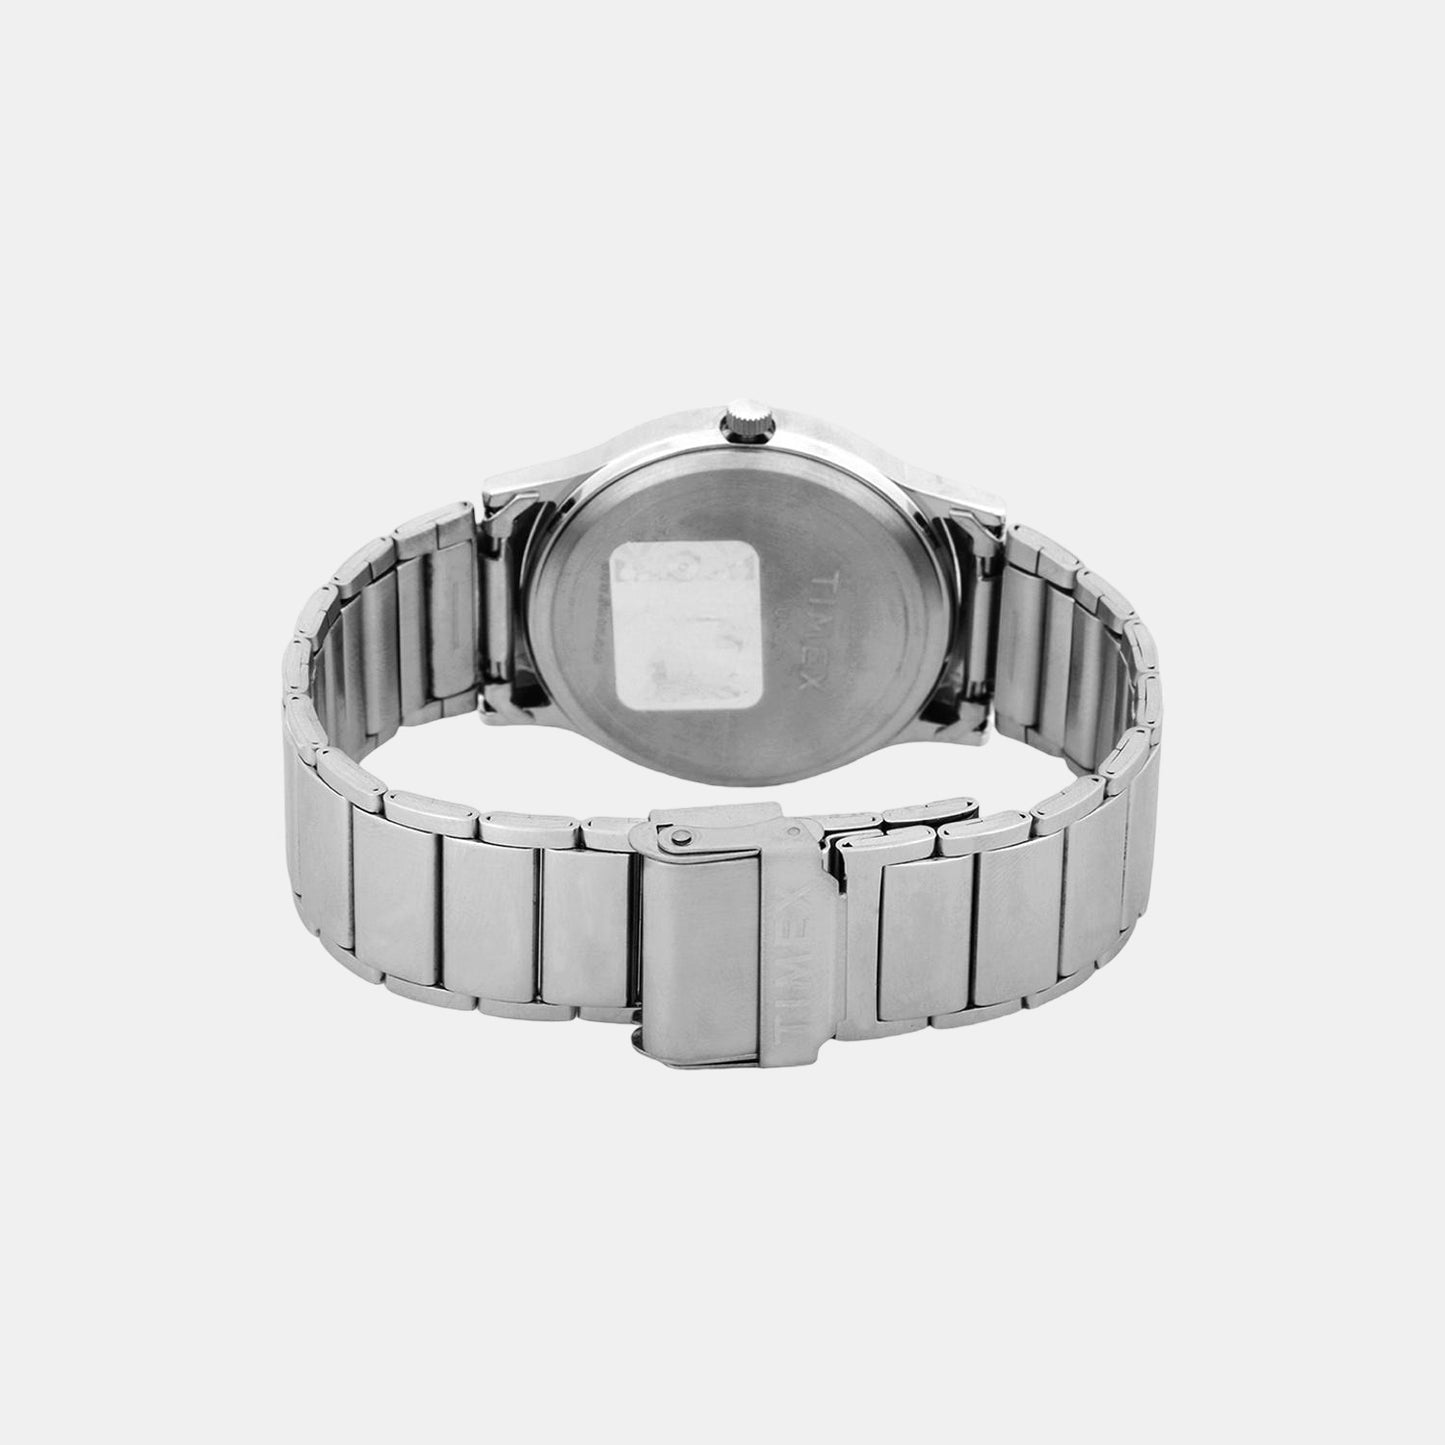 timex-silver-analog-men-watch-tw000r430